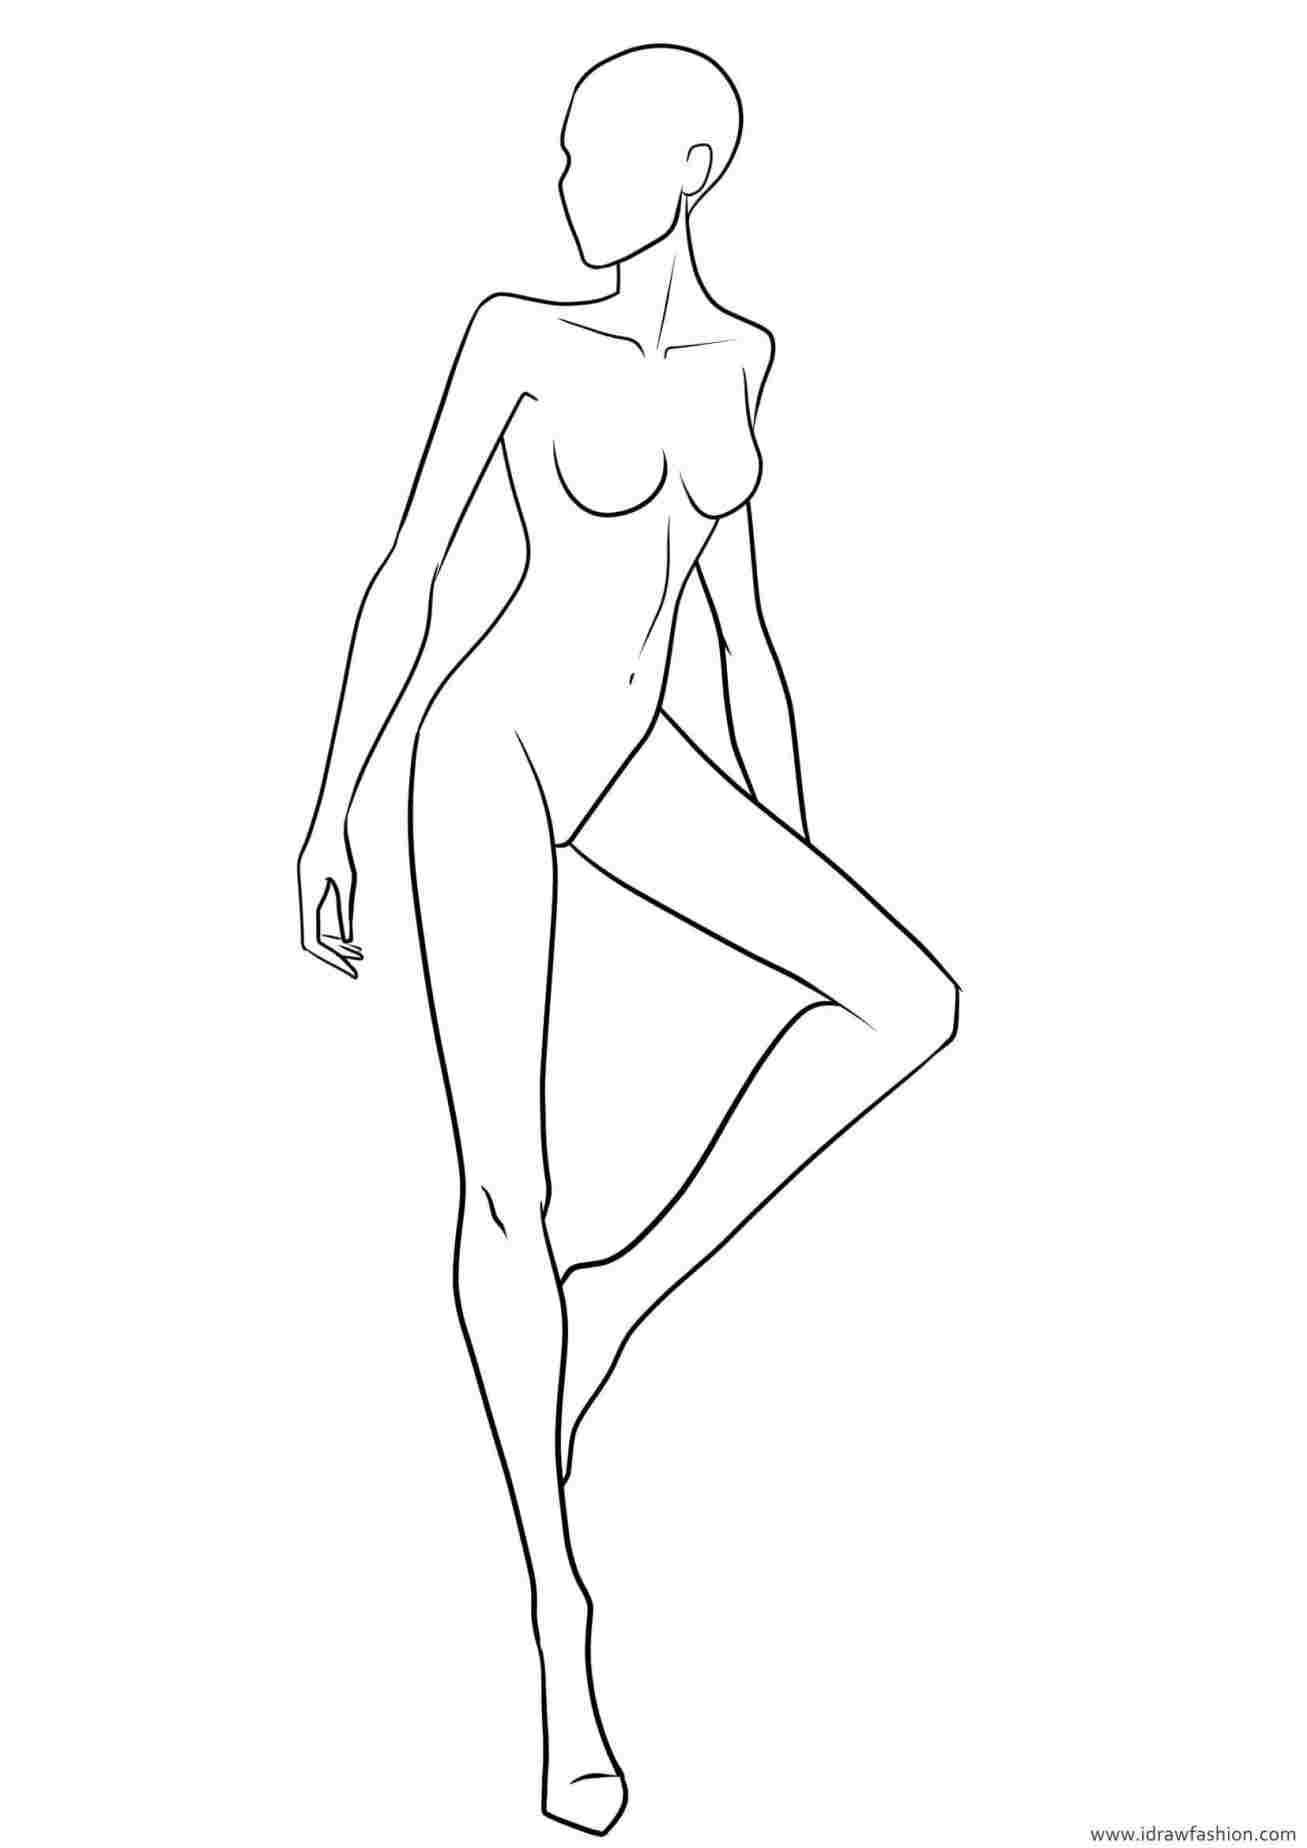 How Female Body Base Drawing To Draw Manga Bodies Part U - Female Body...